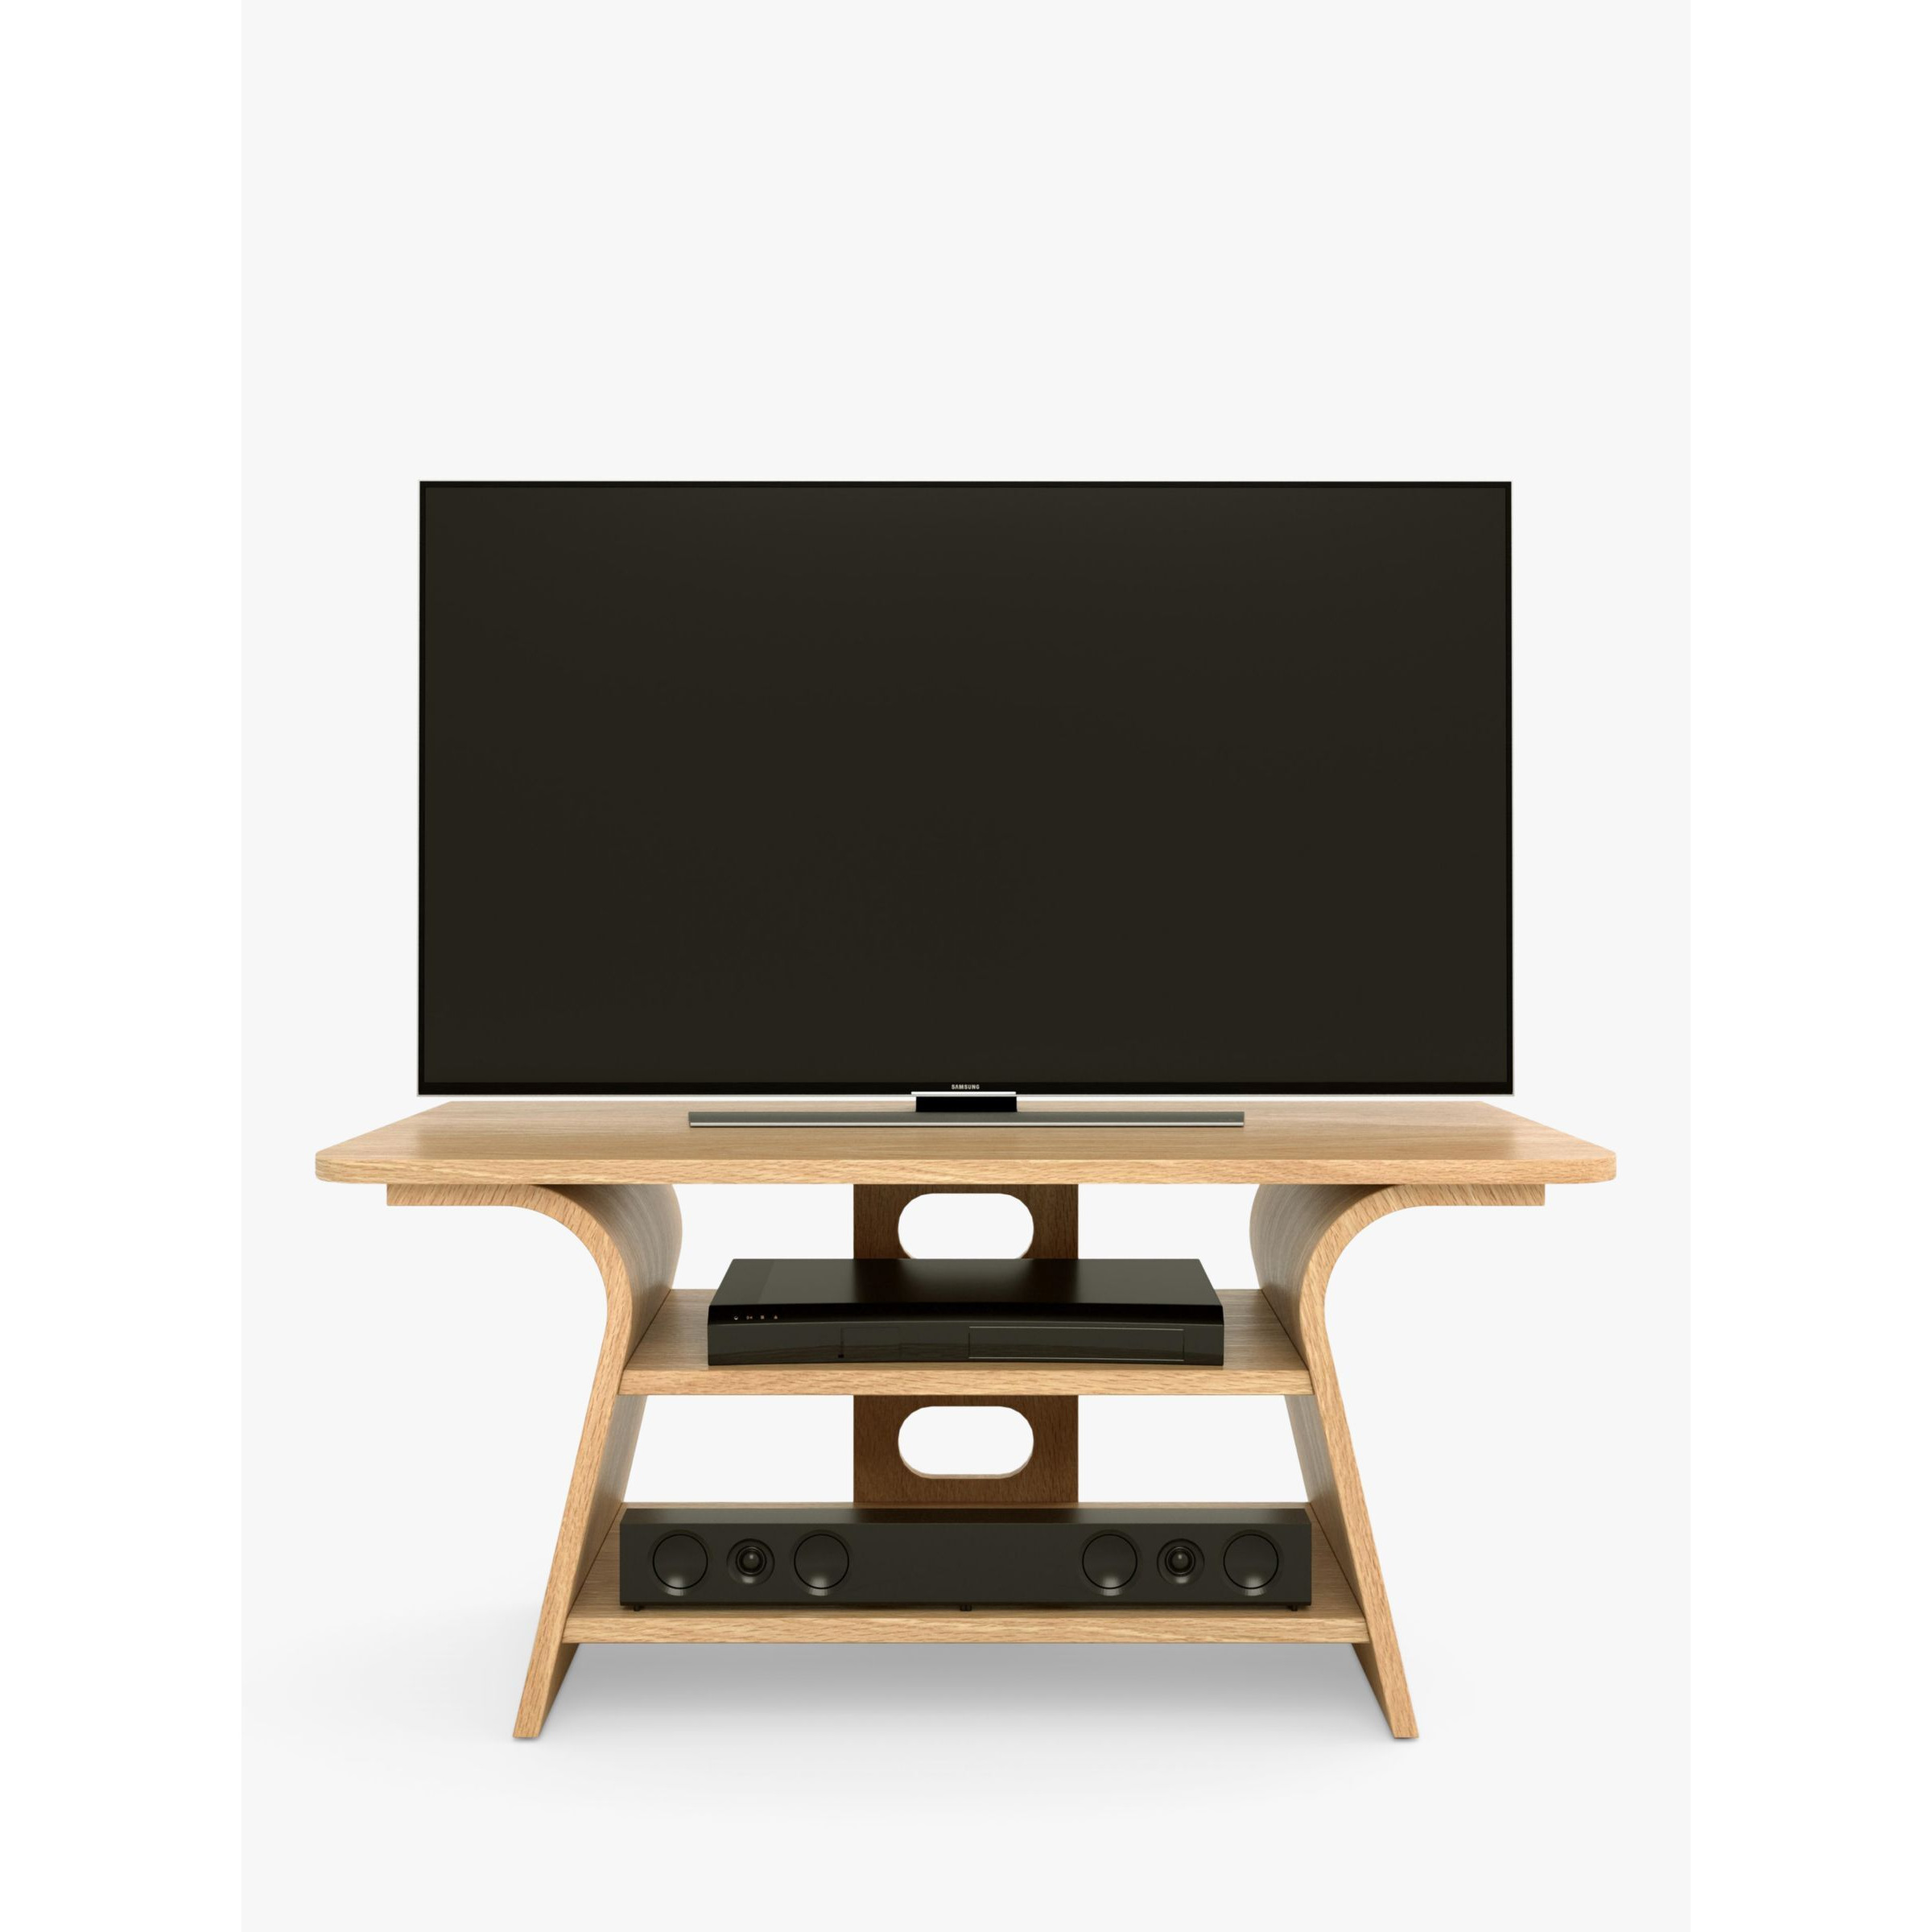 "Tom Schneider Chloe 1000 TV Stand for TVs up to 45"", Natural Walnut" - image 1